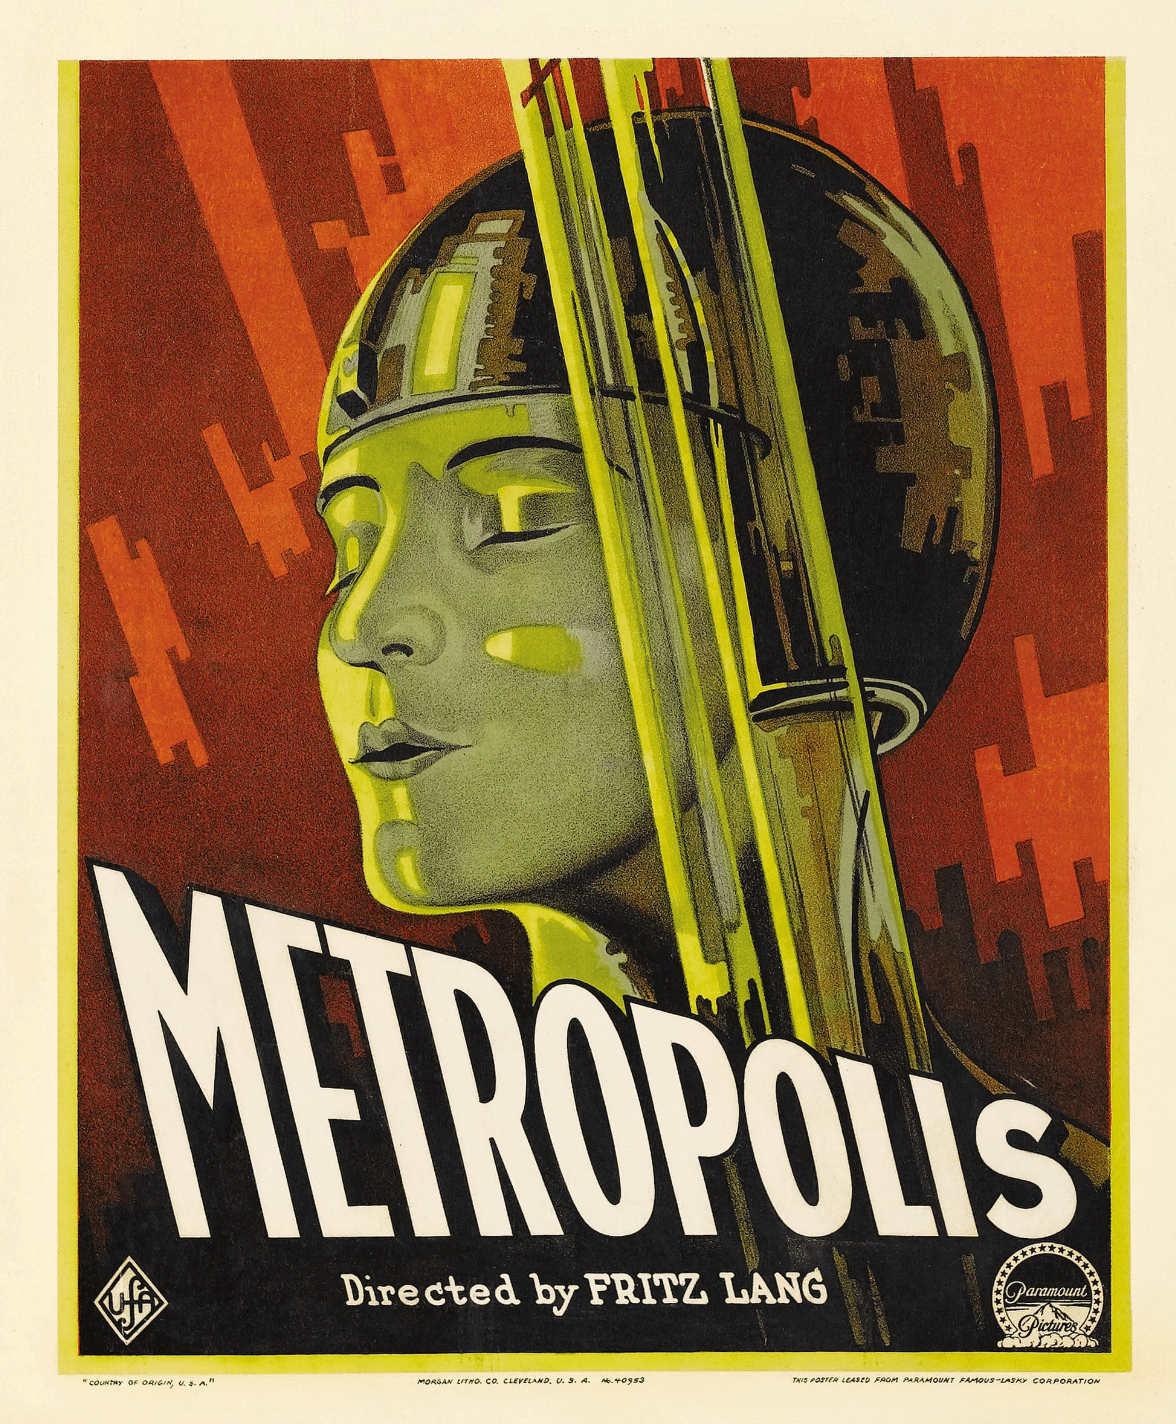 Metropolis movie poster Image Courtesy of IMBD